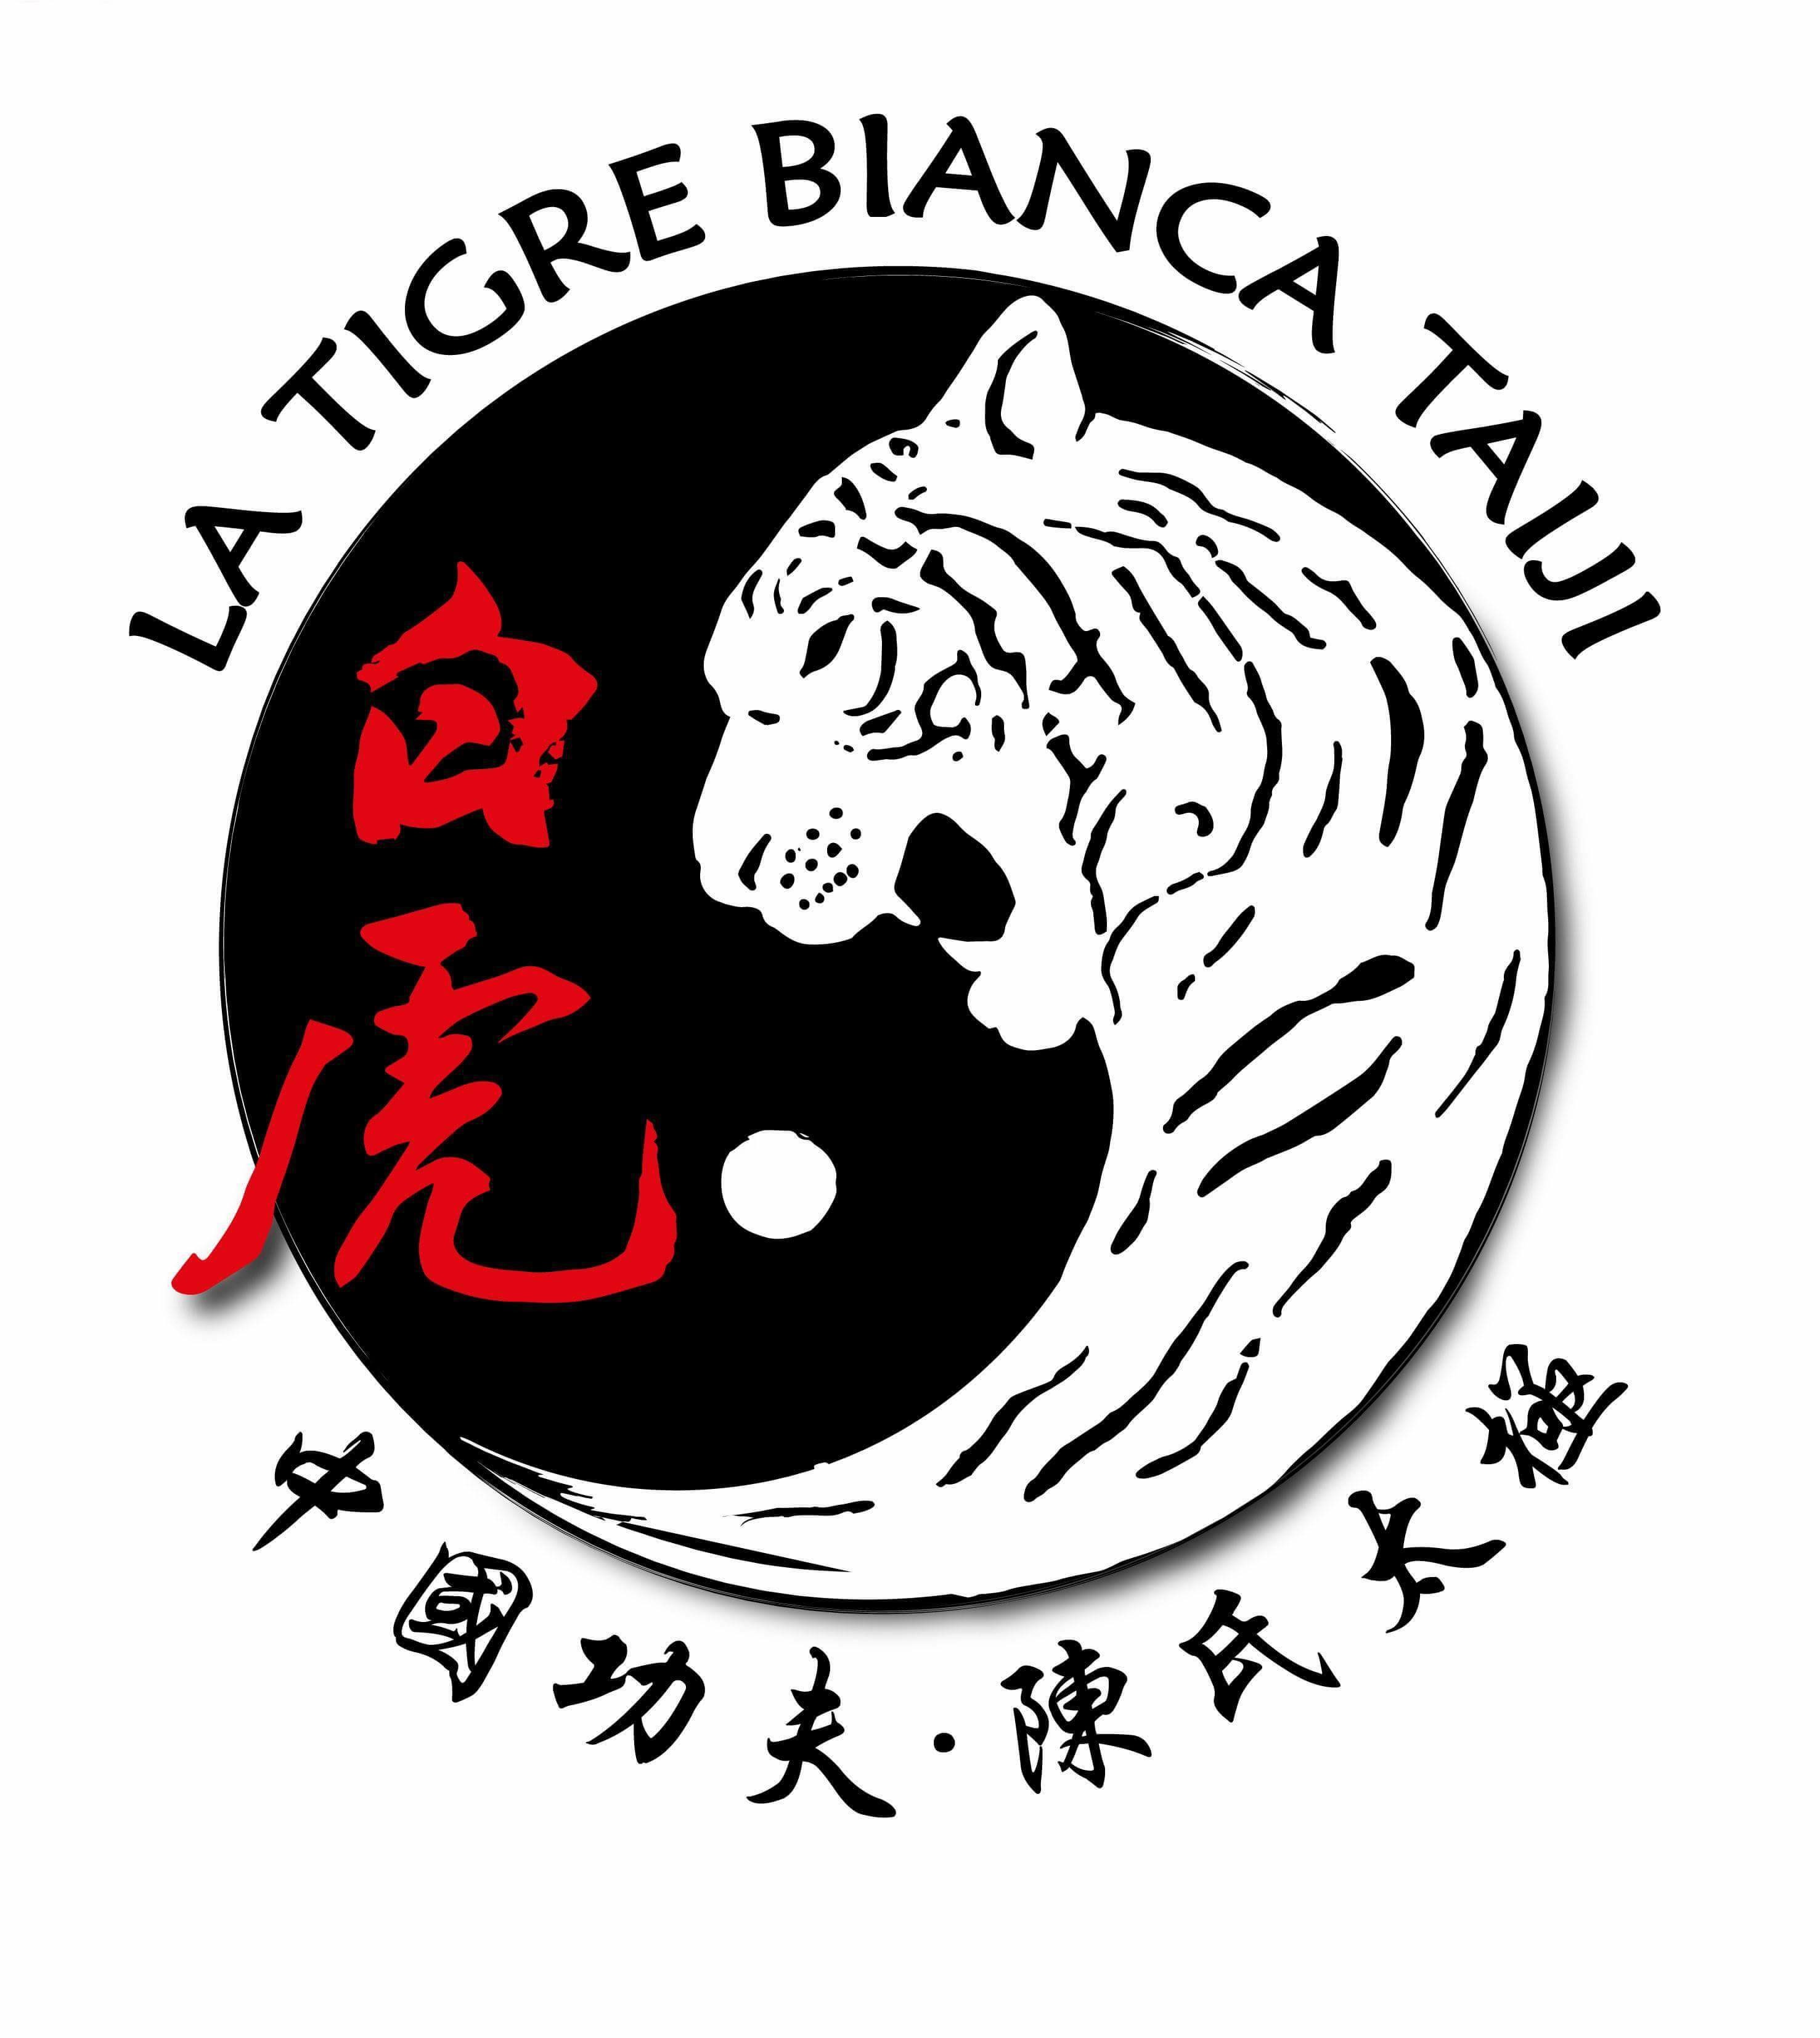 La Tigre Bianca Taiji